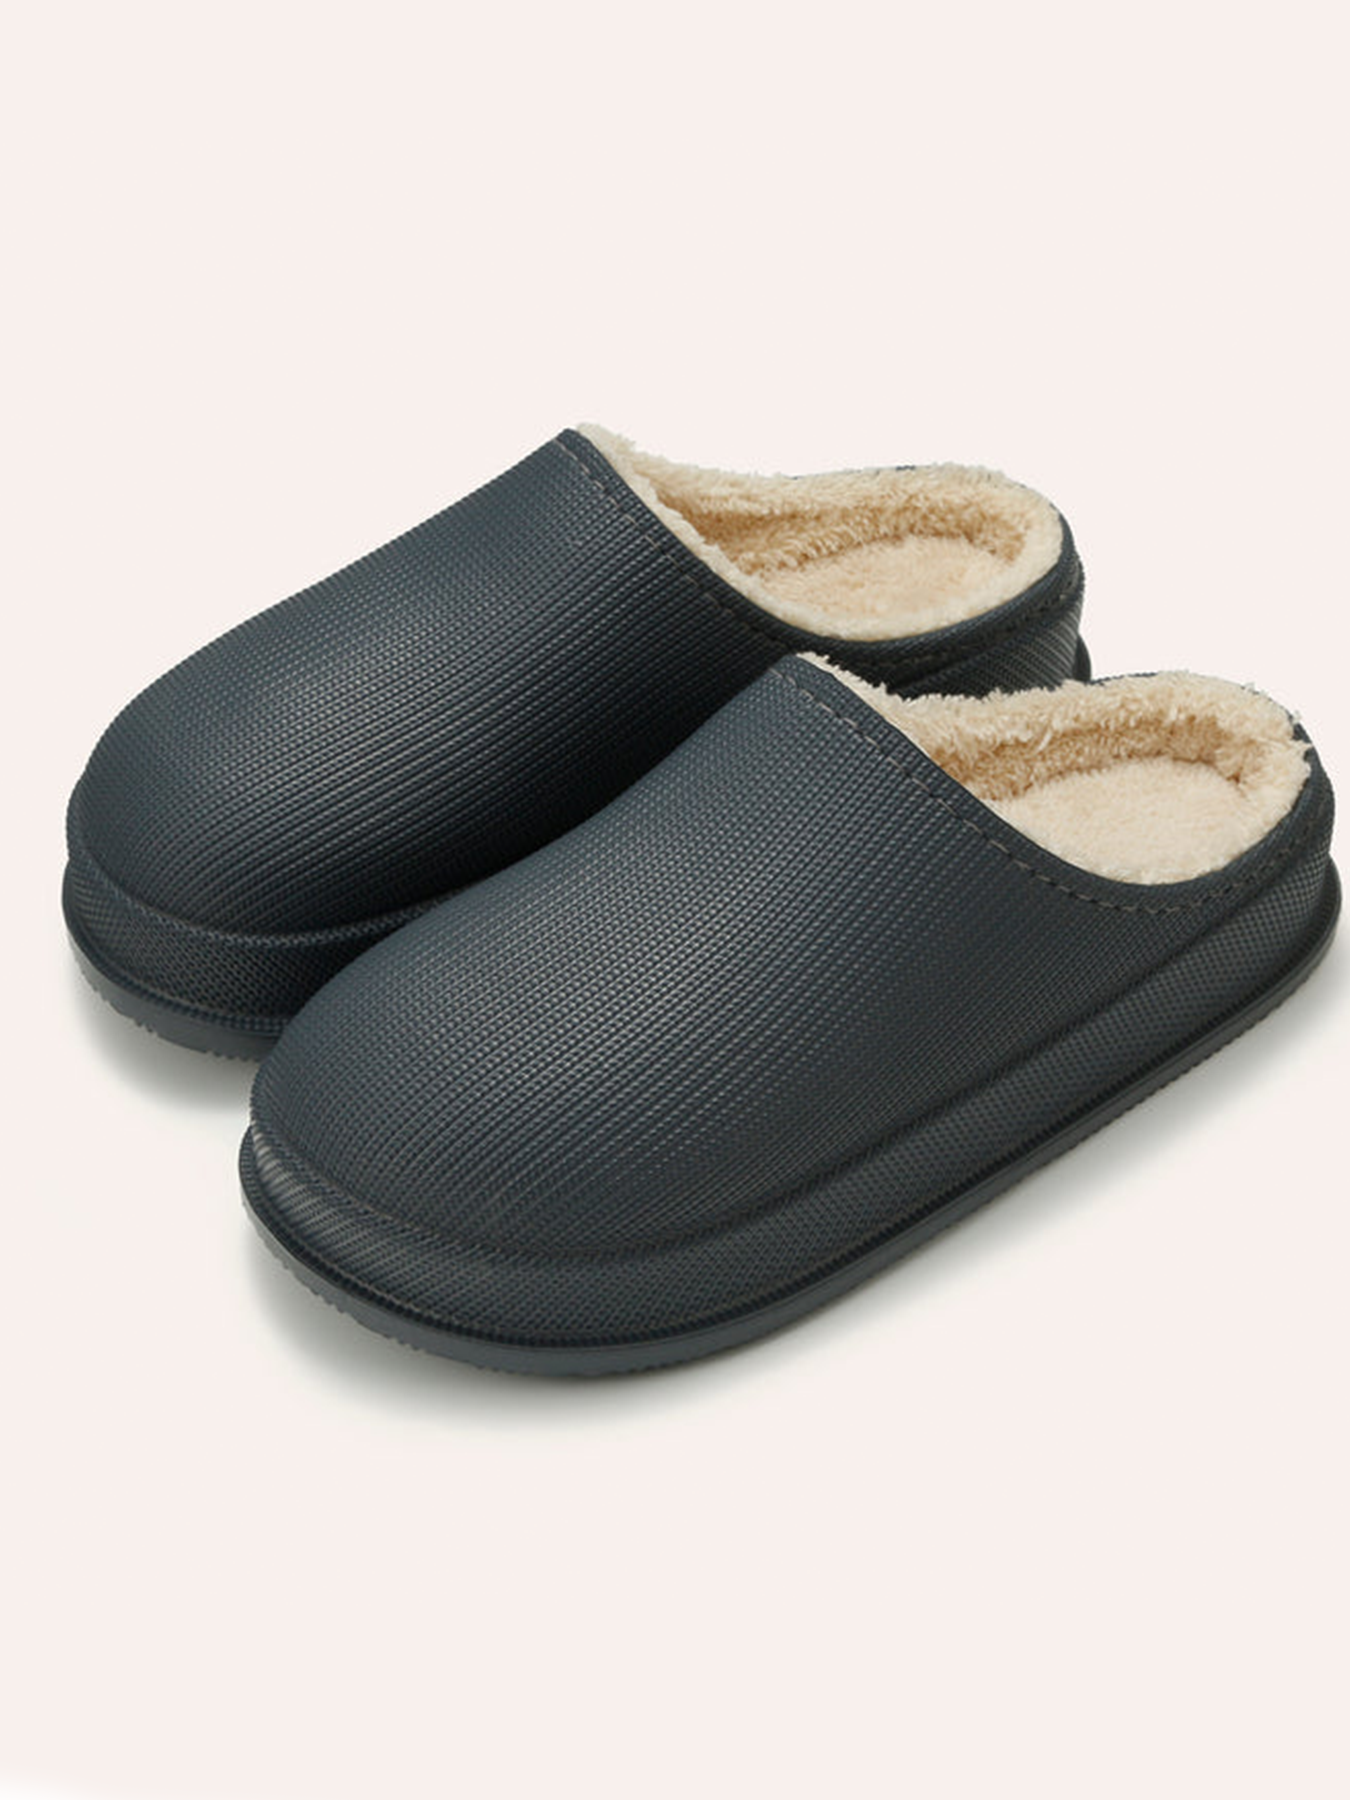 Couple Winter Warm Plush Slippers- Non-slip Soft Sole Slides